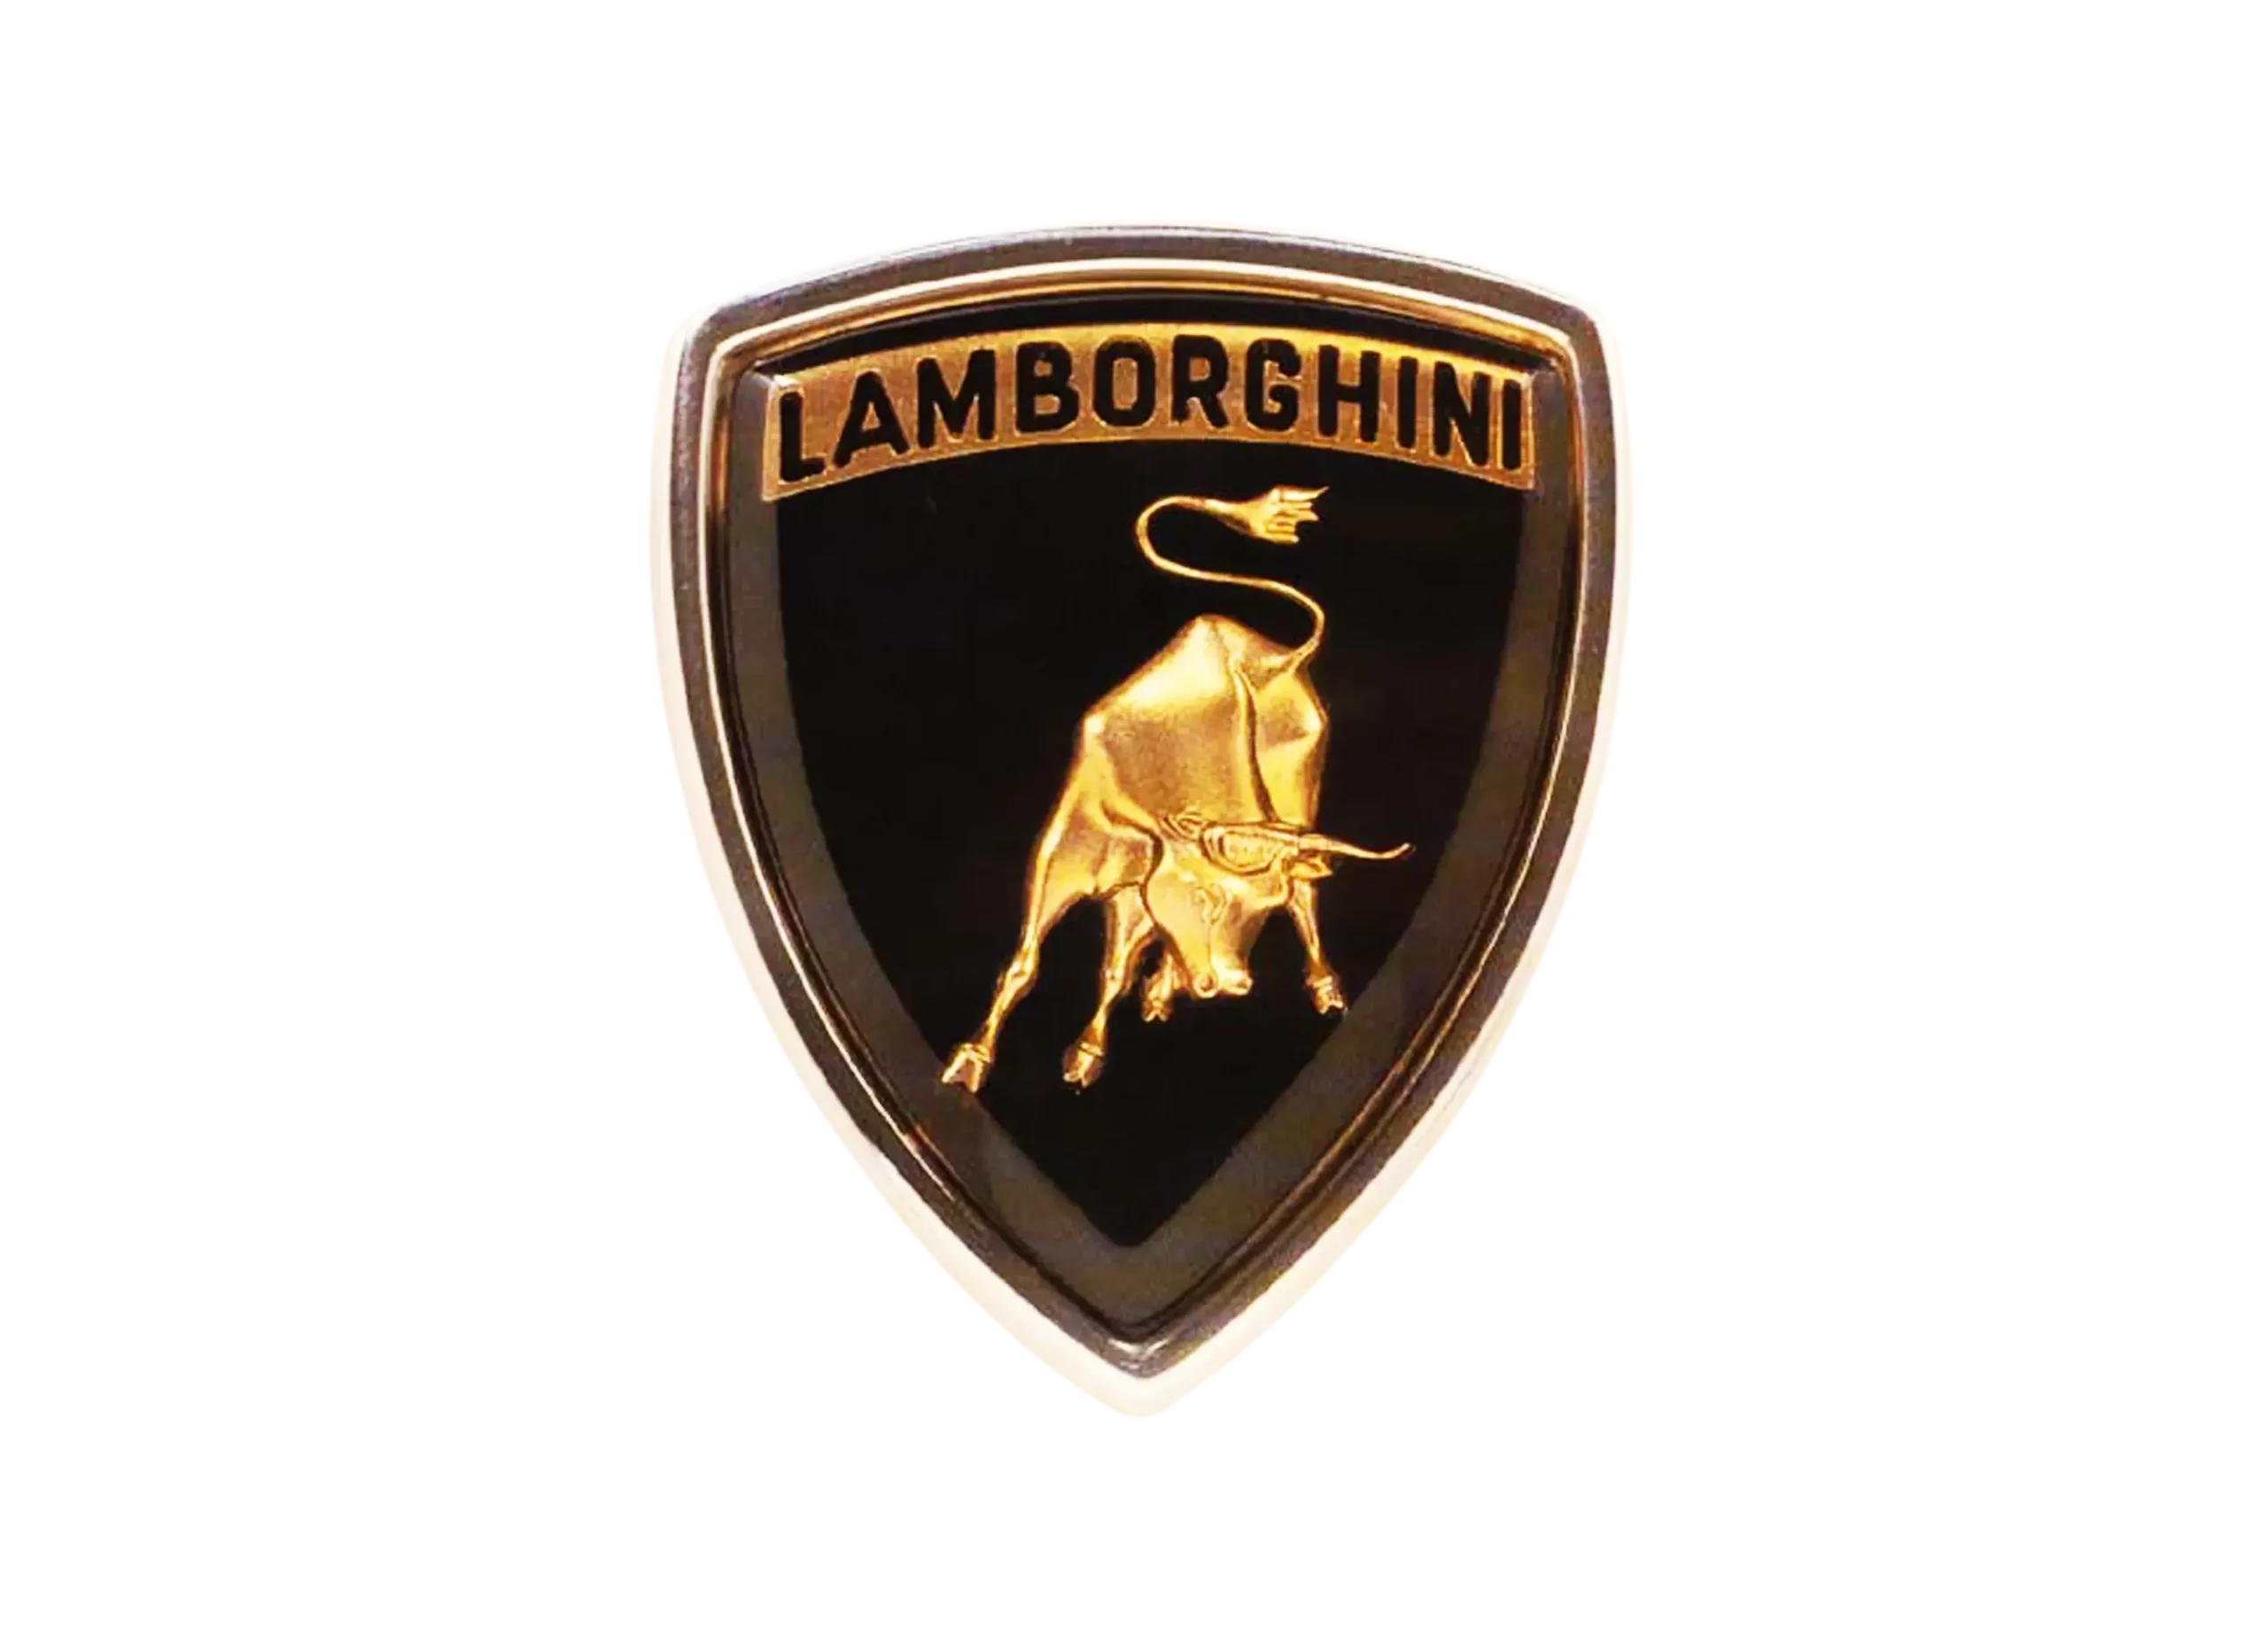 Lamborghini logo 1972-1974